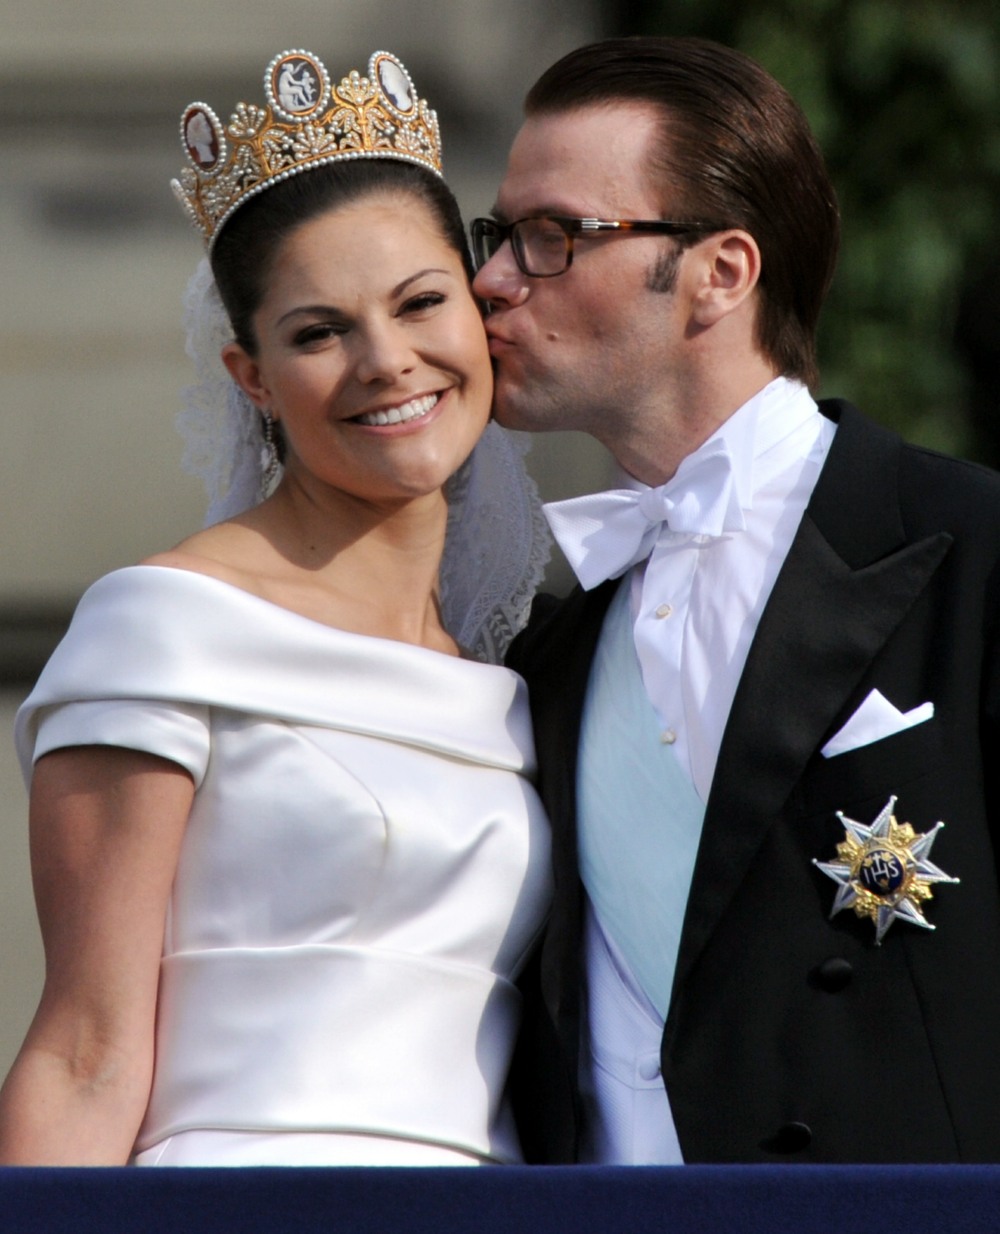 Wedding of Crown Princess Victoria and Daniel Westling